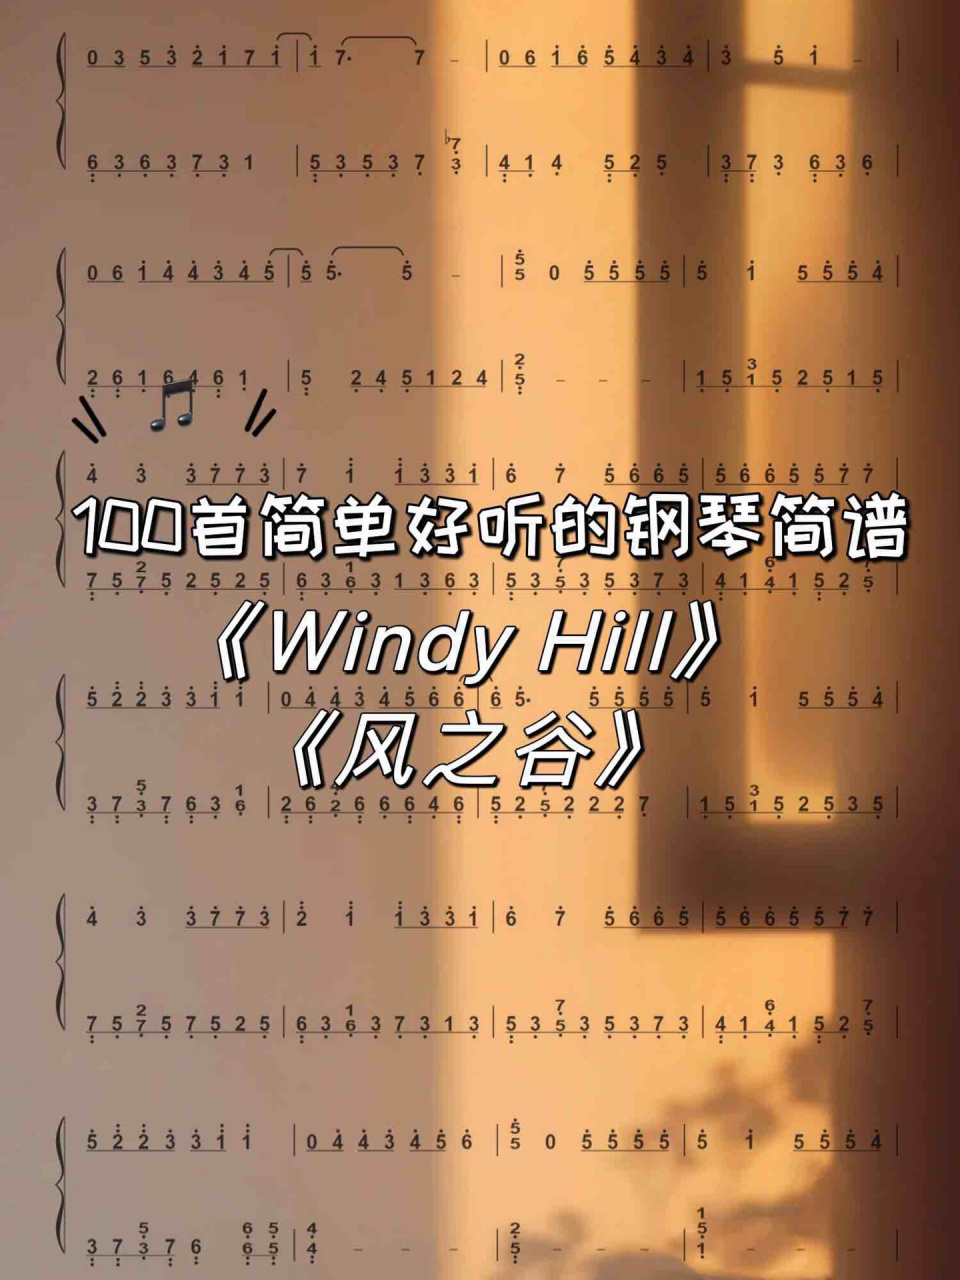 windyhill钢琴简谱图片